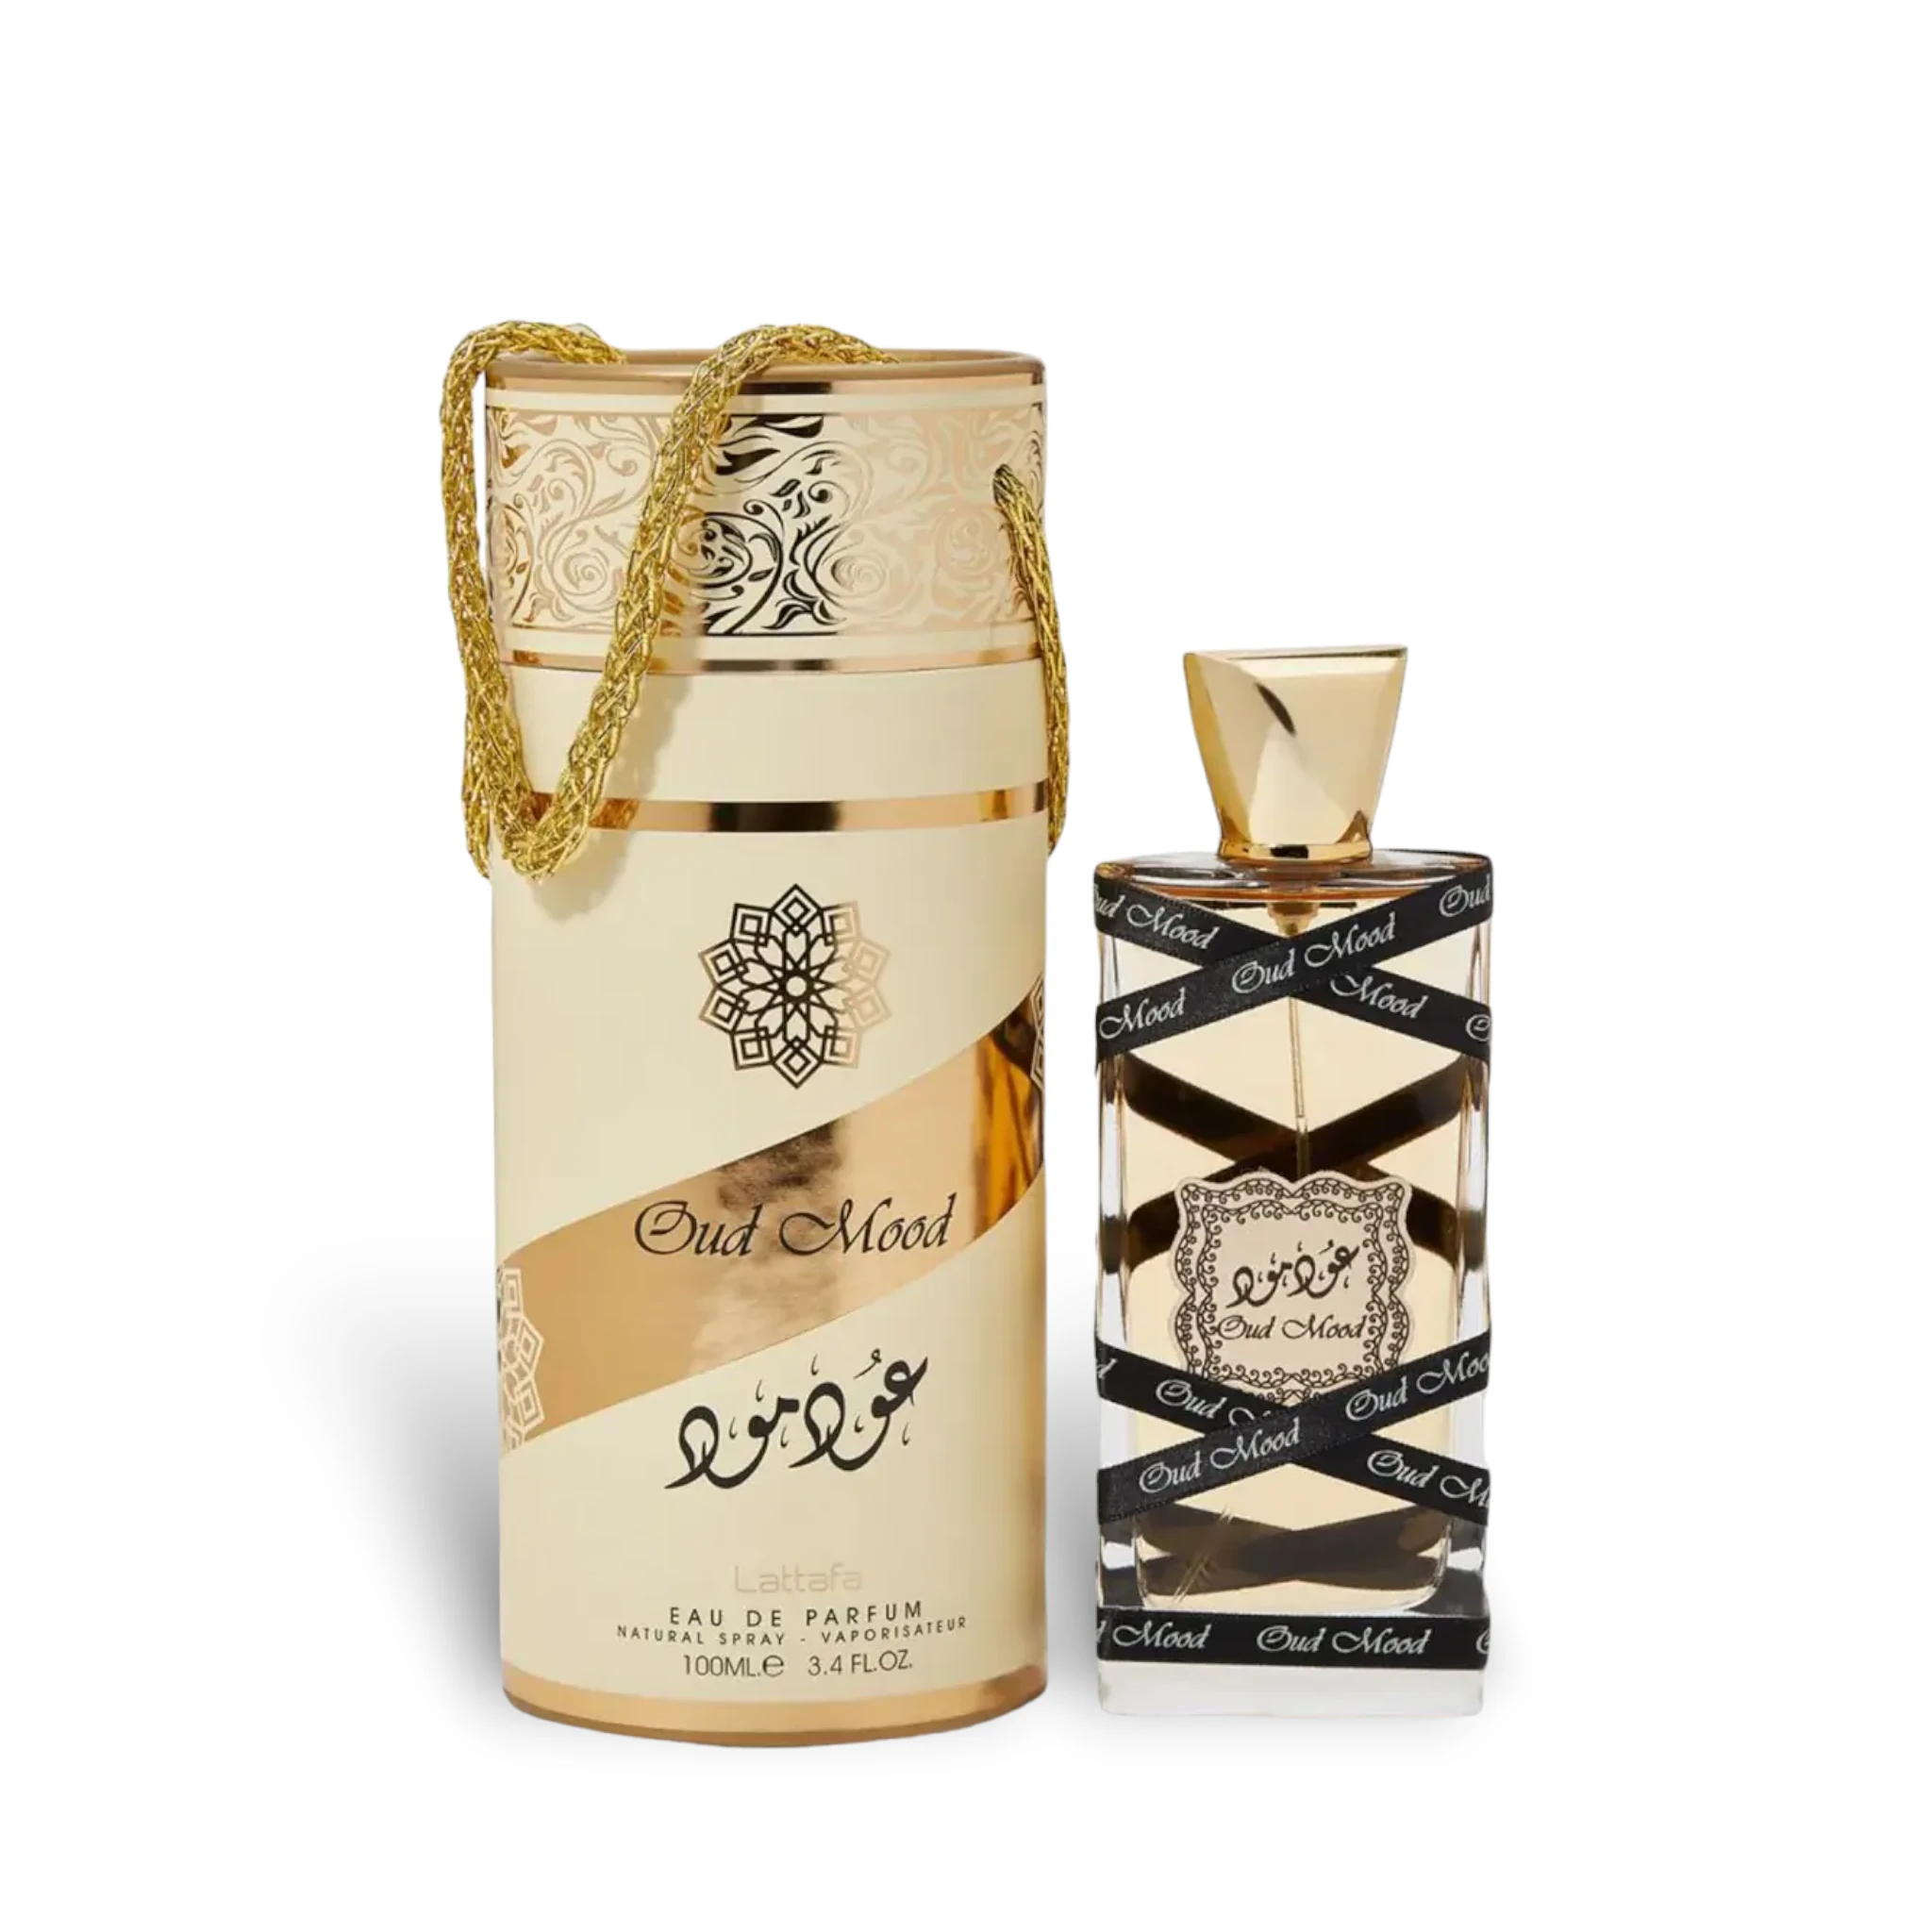 Oud Mood Gold Perfume Eau De Parfum 100Ml Edp By Lattafa